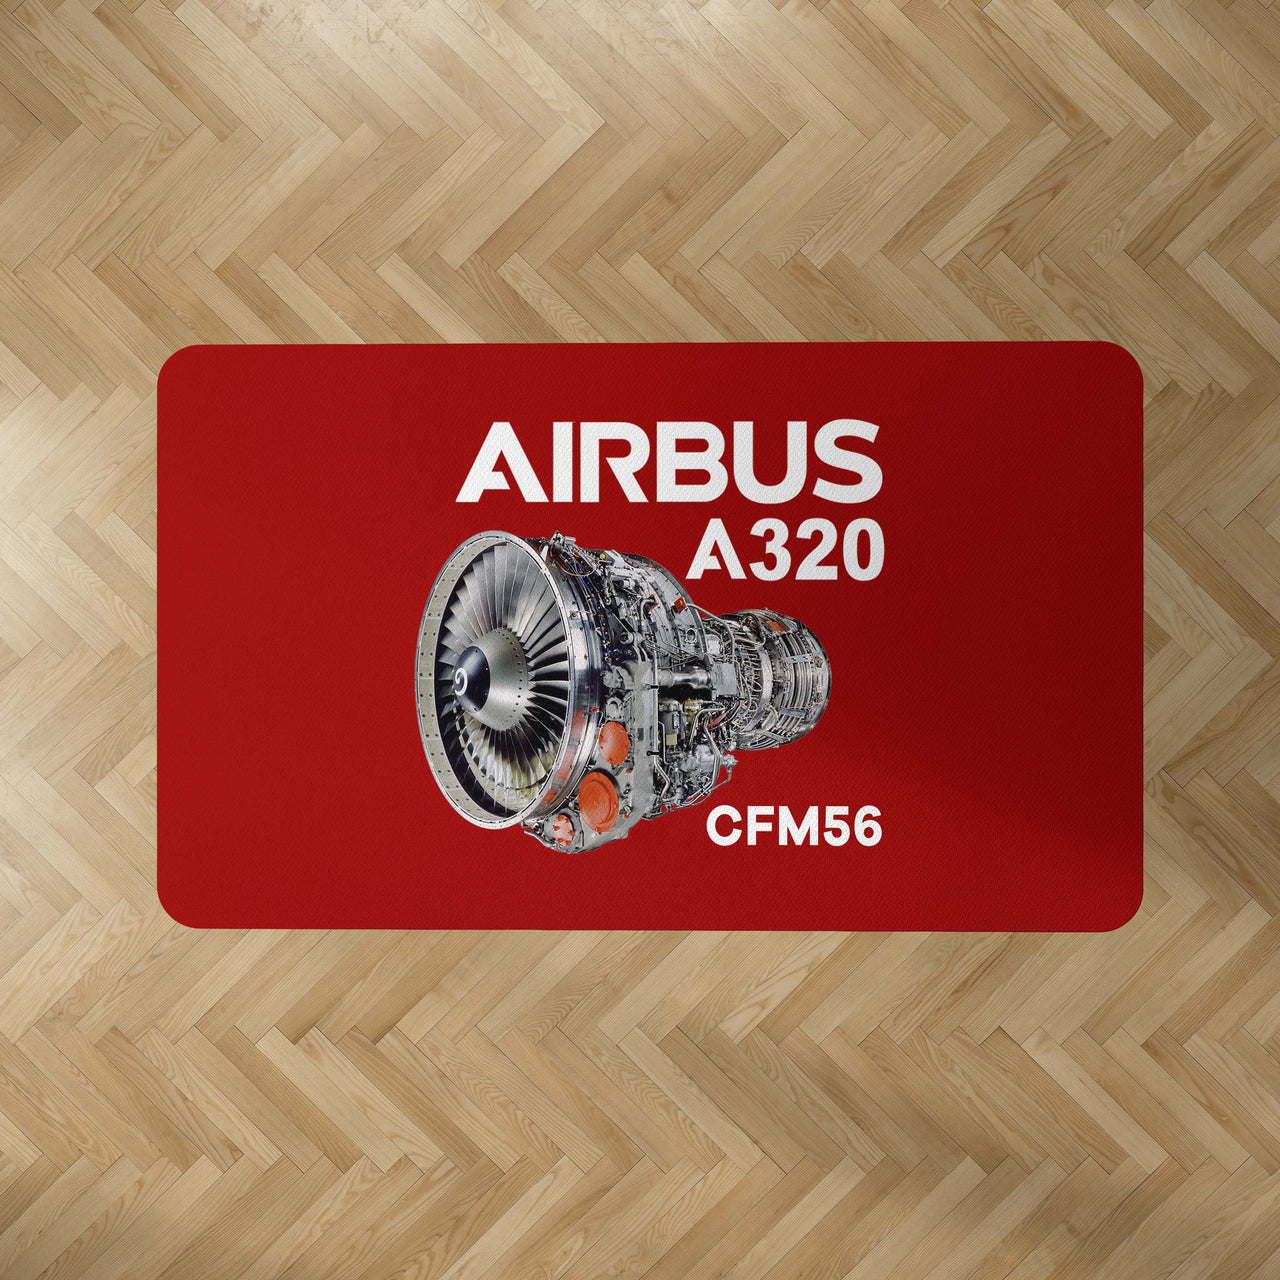 Airbus A320 & CFM56 Engine.png Designed Carpet & Floor Mats